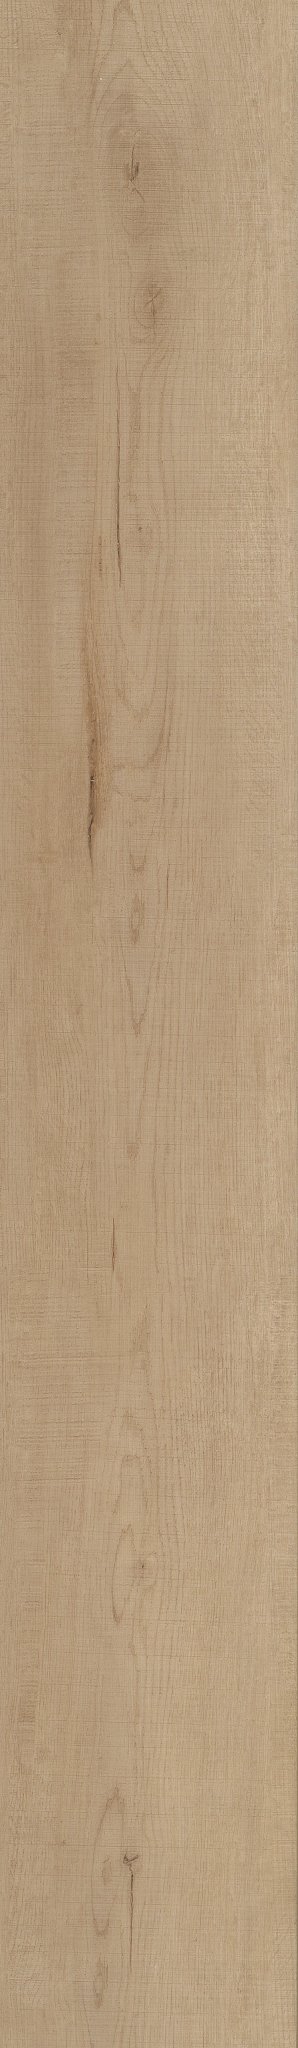 Calypso Oak VV012-00761 LVP Flooring